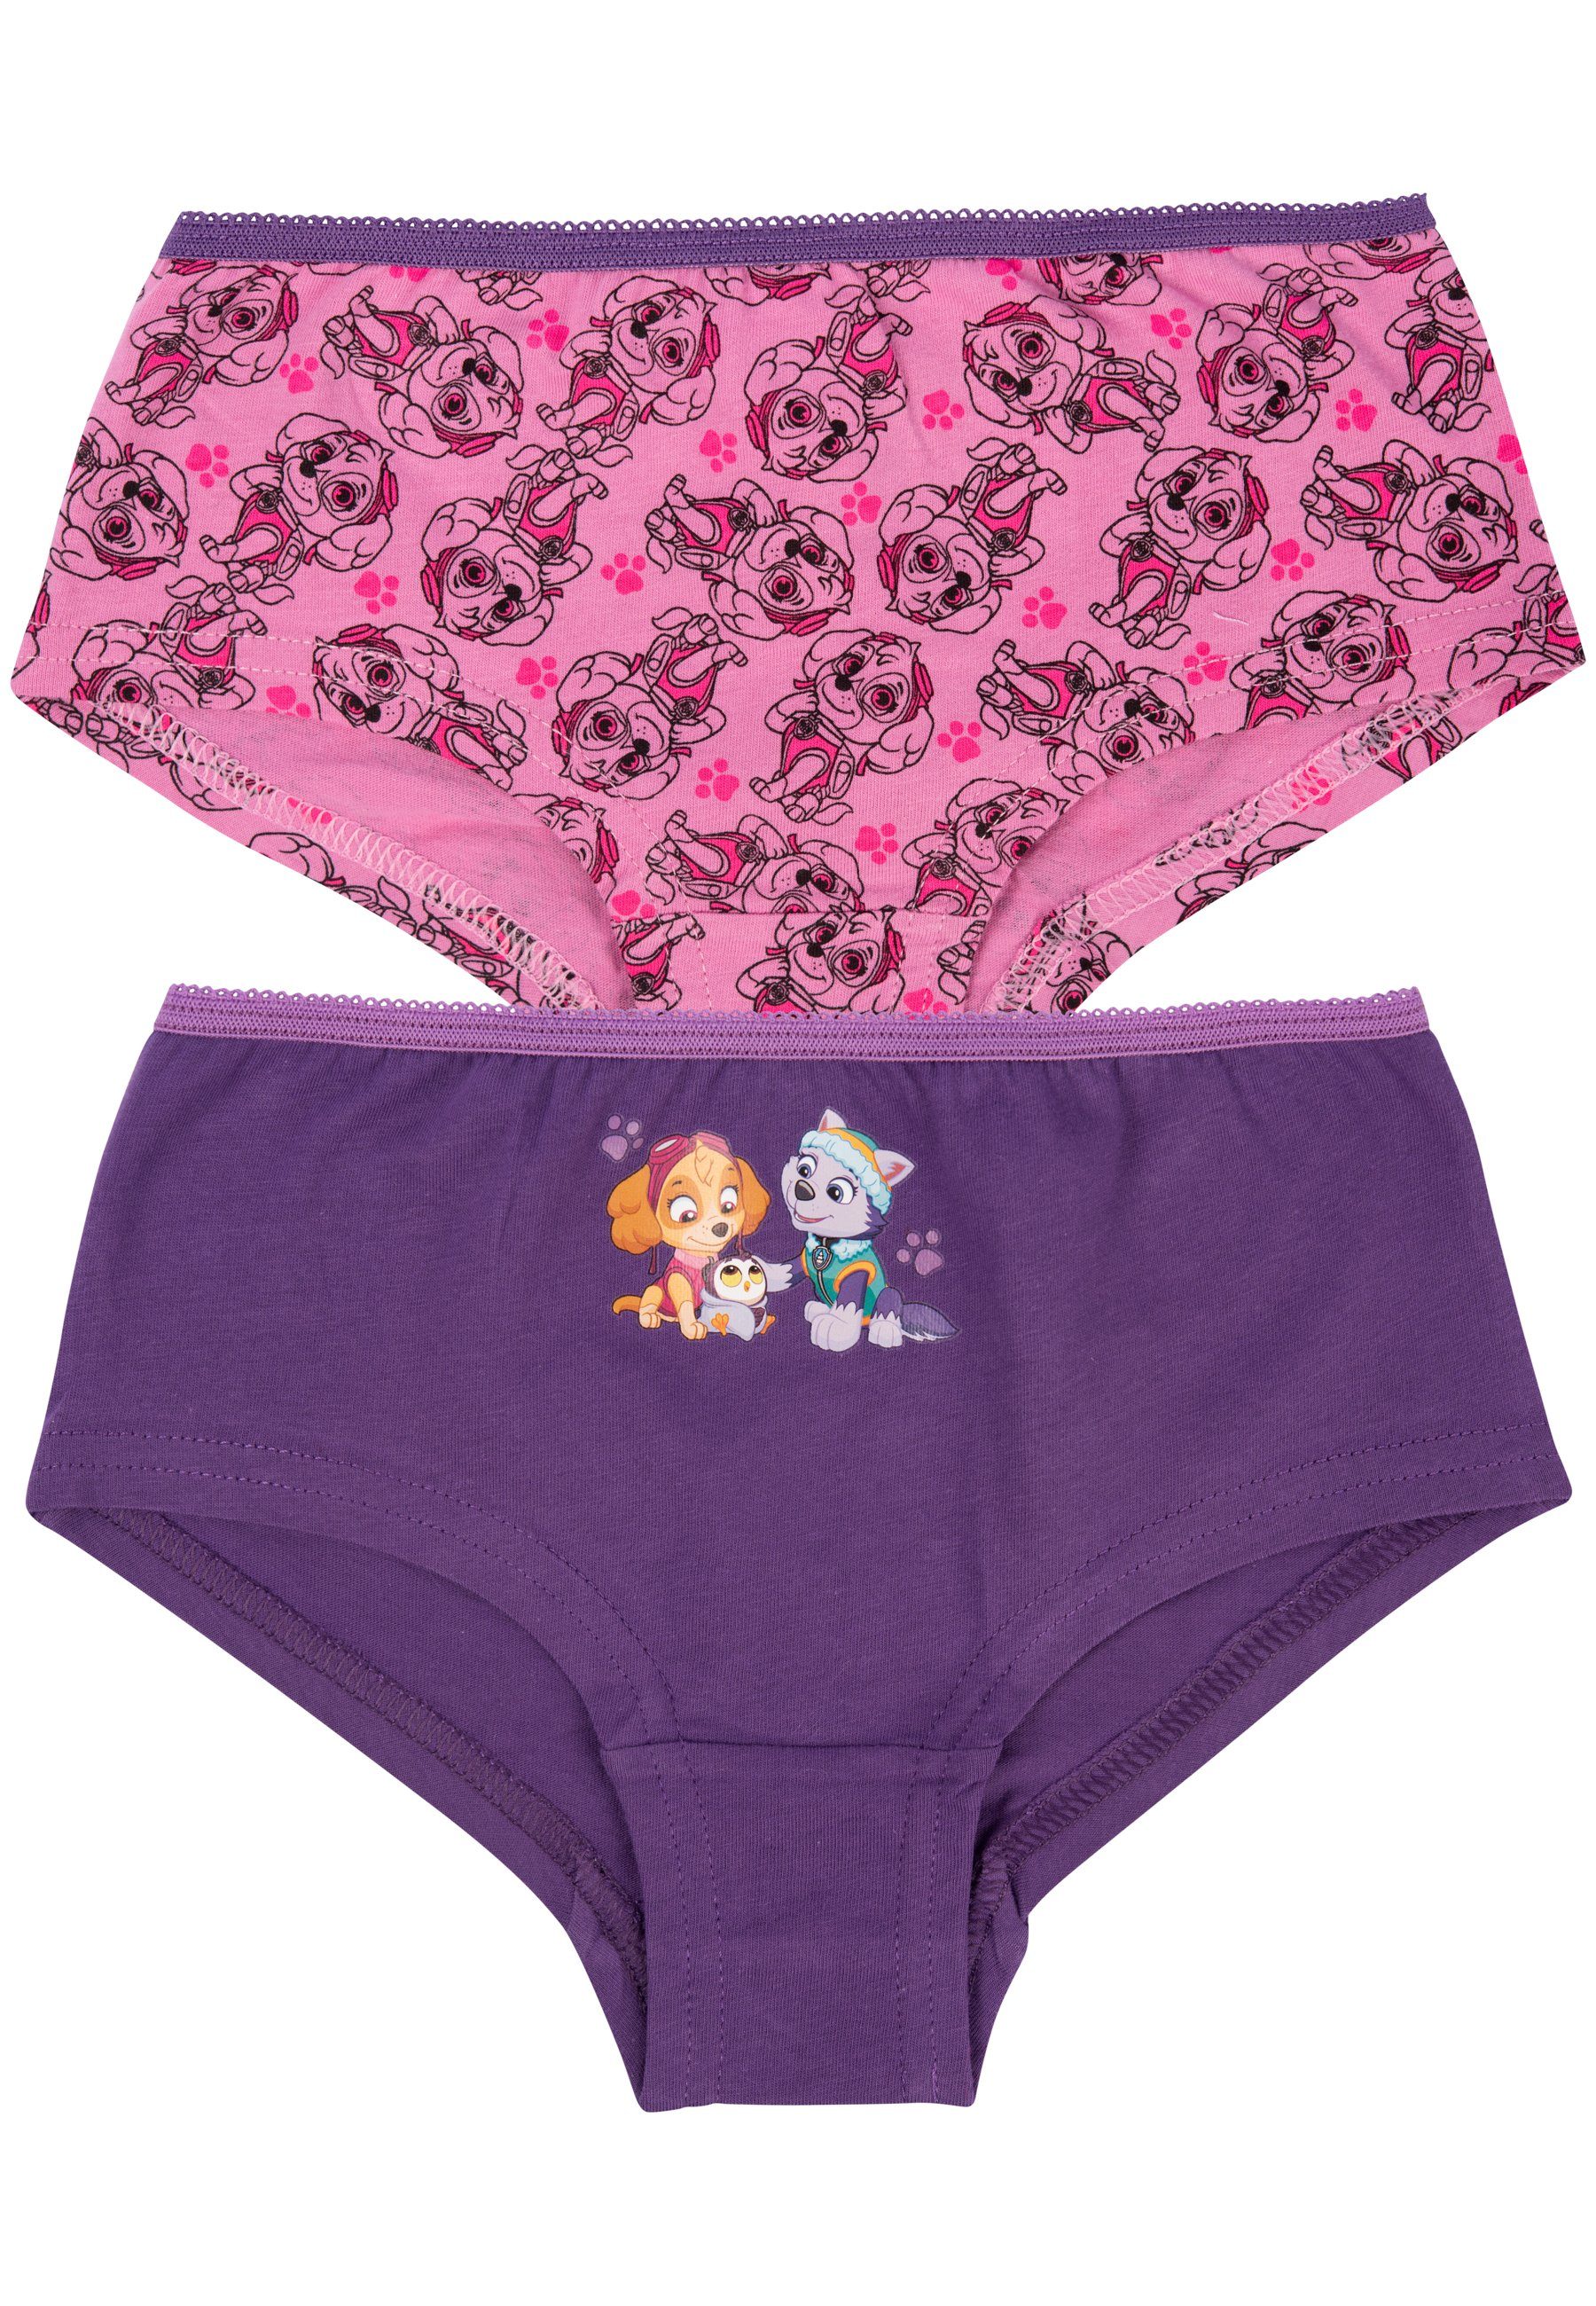 United Labels® Panty Paw Patrol Unterhose für Mädchen Panty Slip Rosa/Lila (2er Pack)